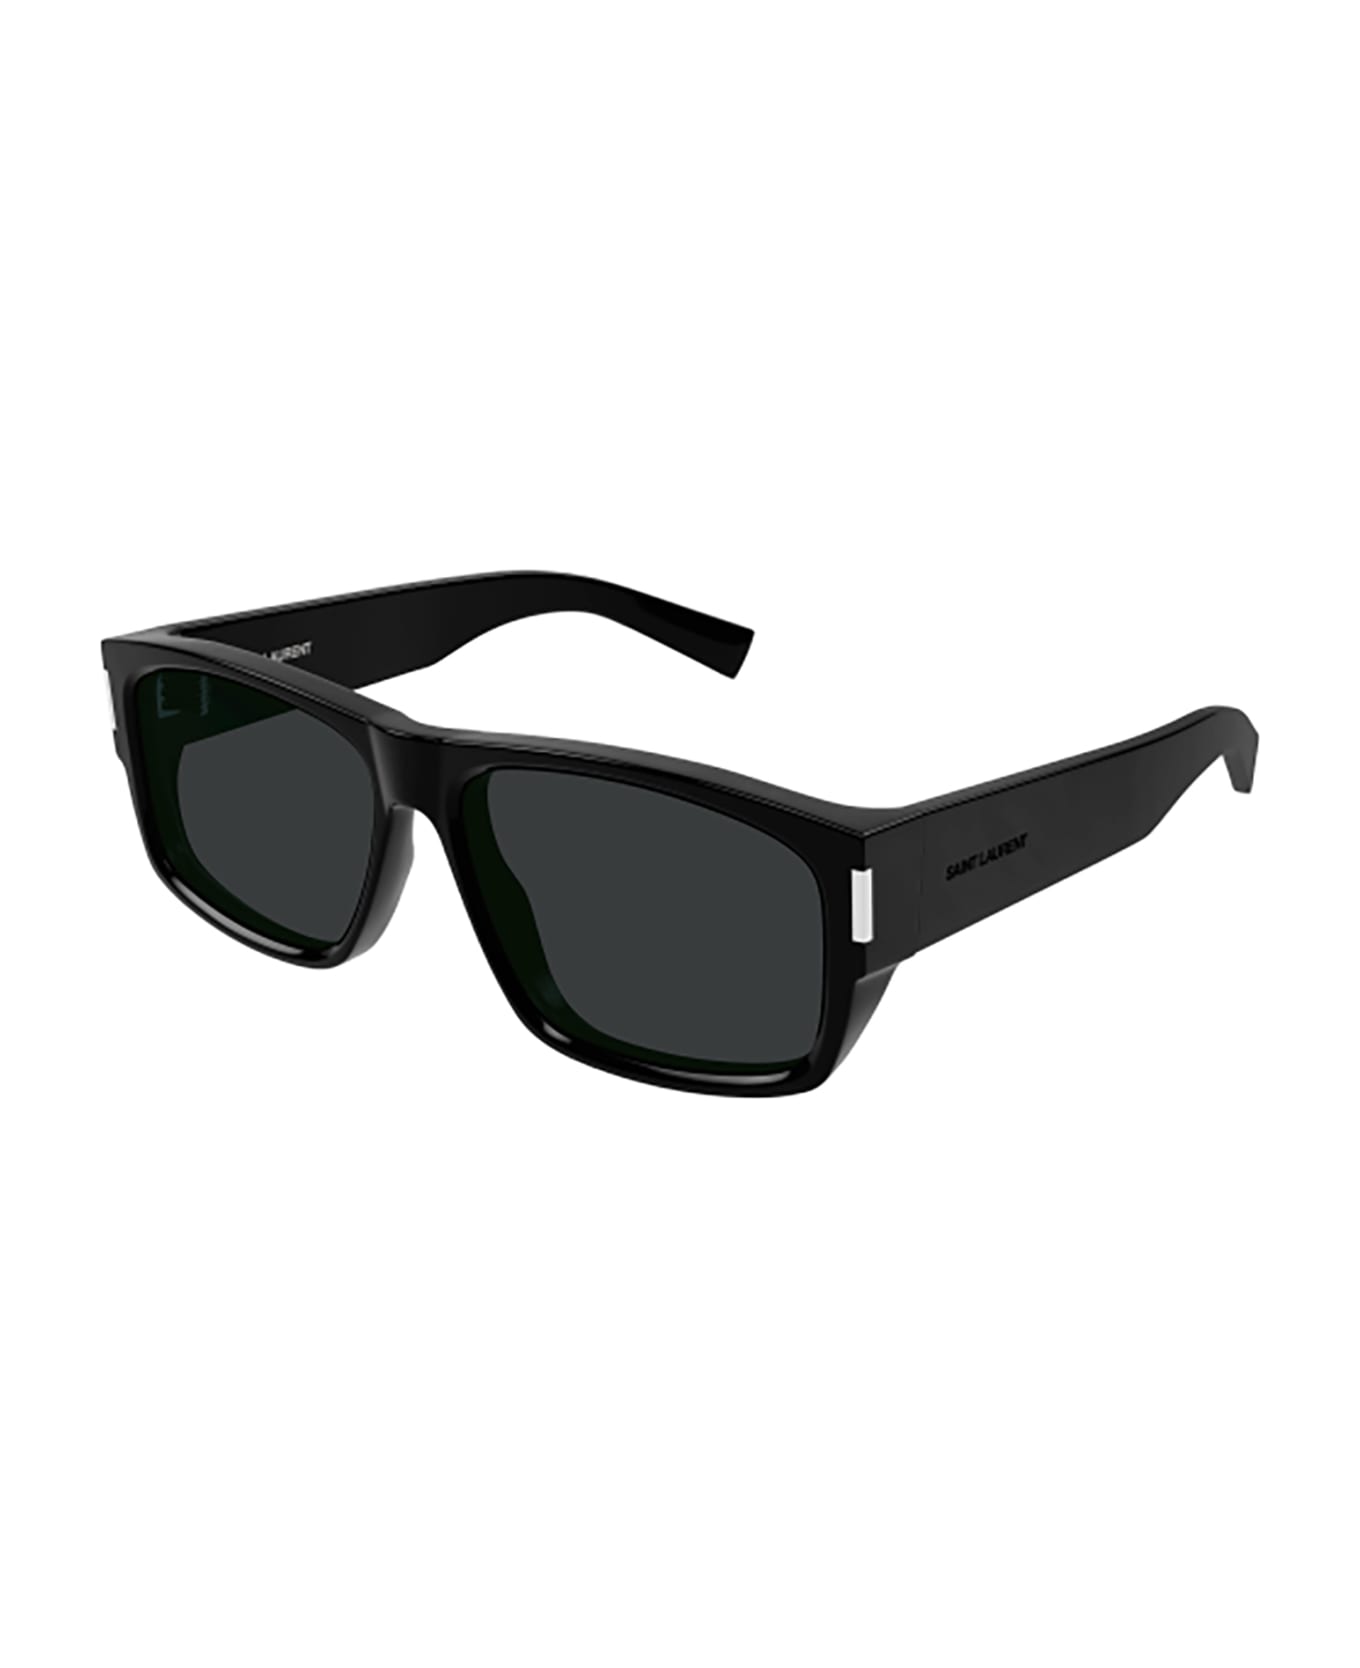 Saint Laurent Eyewear SL 689 Sunglasses - C20 rectangle-frame sunglasses